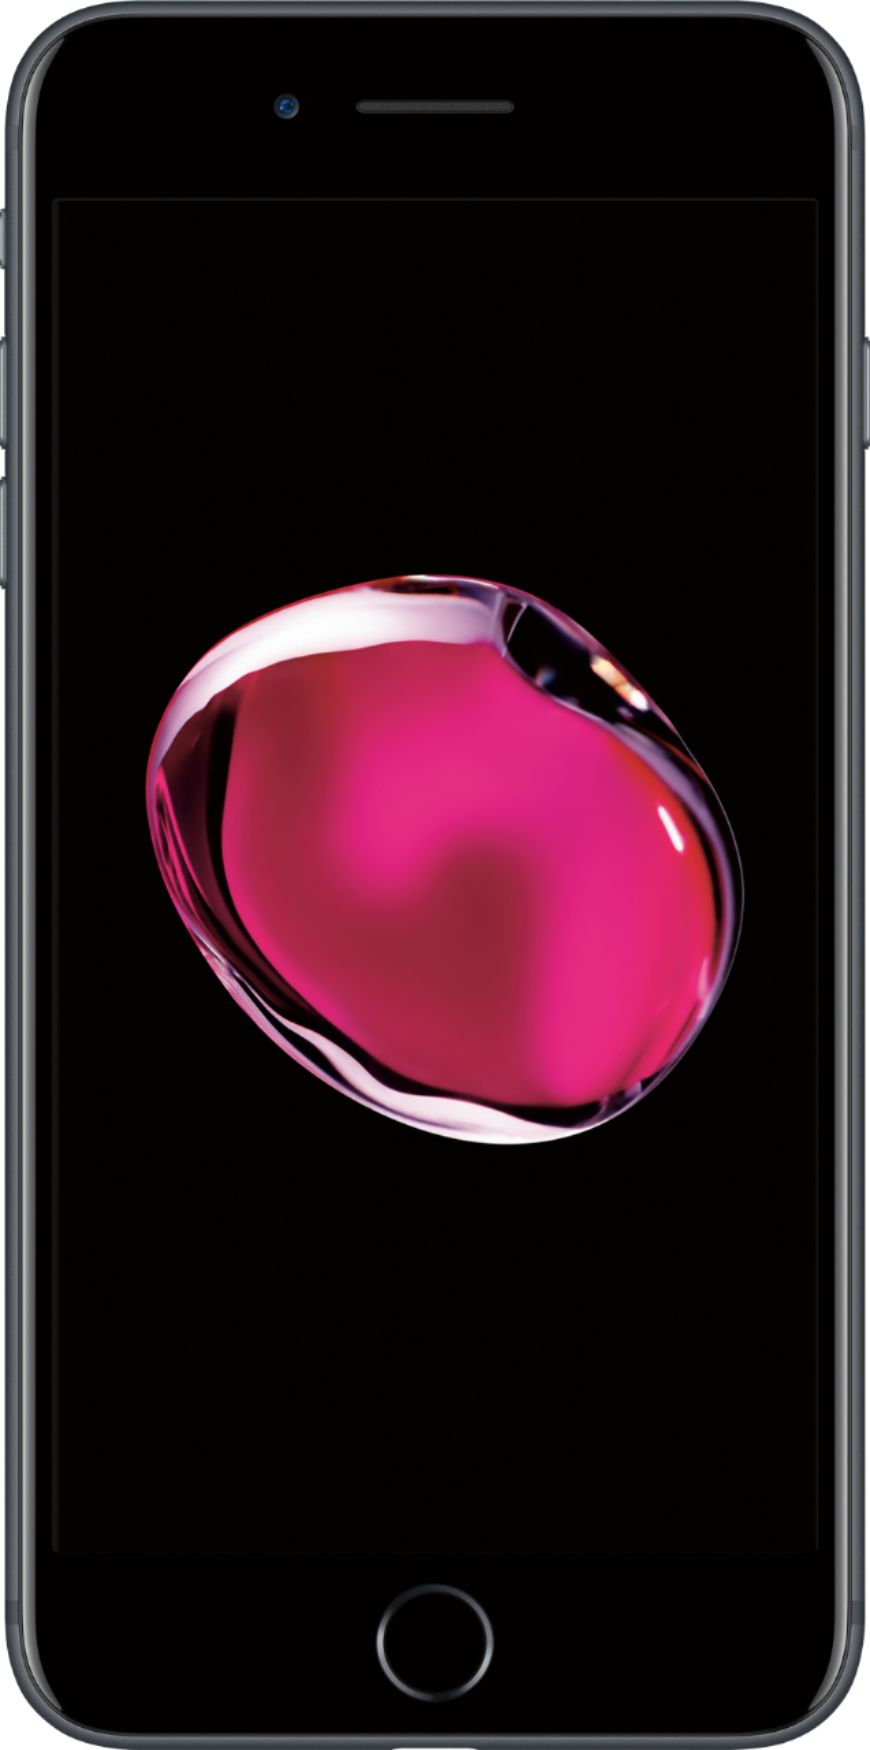 Apple iPhone 7 Plus 32GB Black MNQH2LL/A - Best Buy